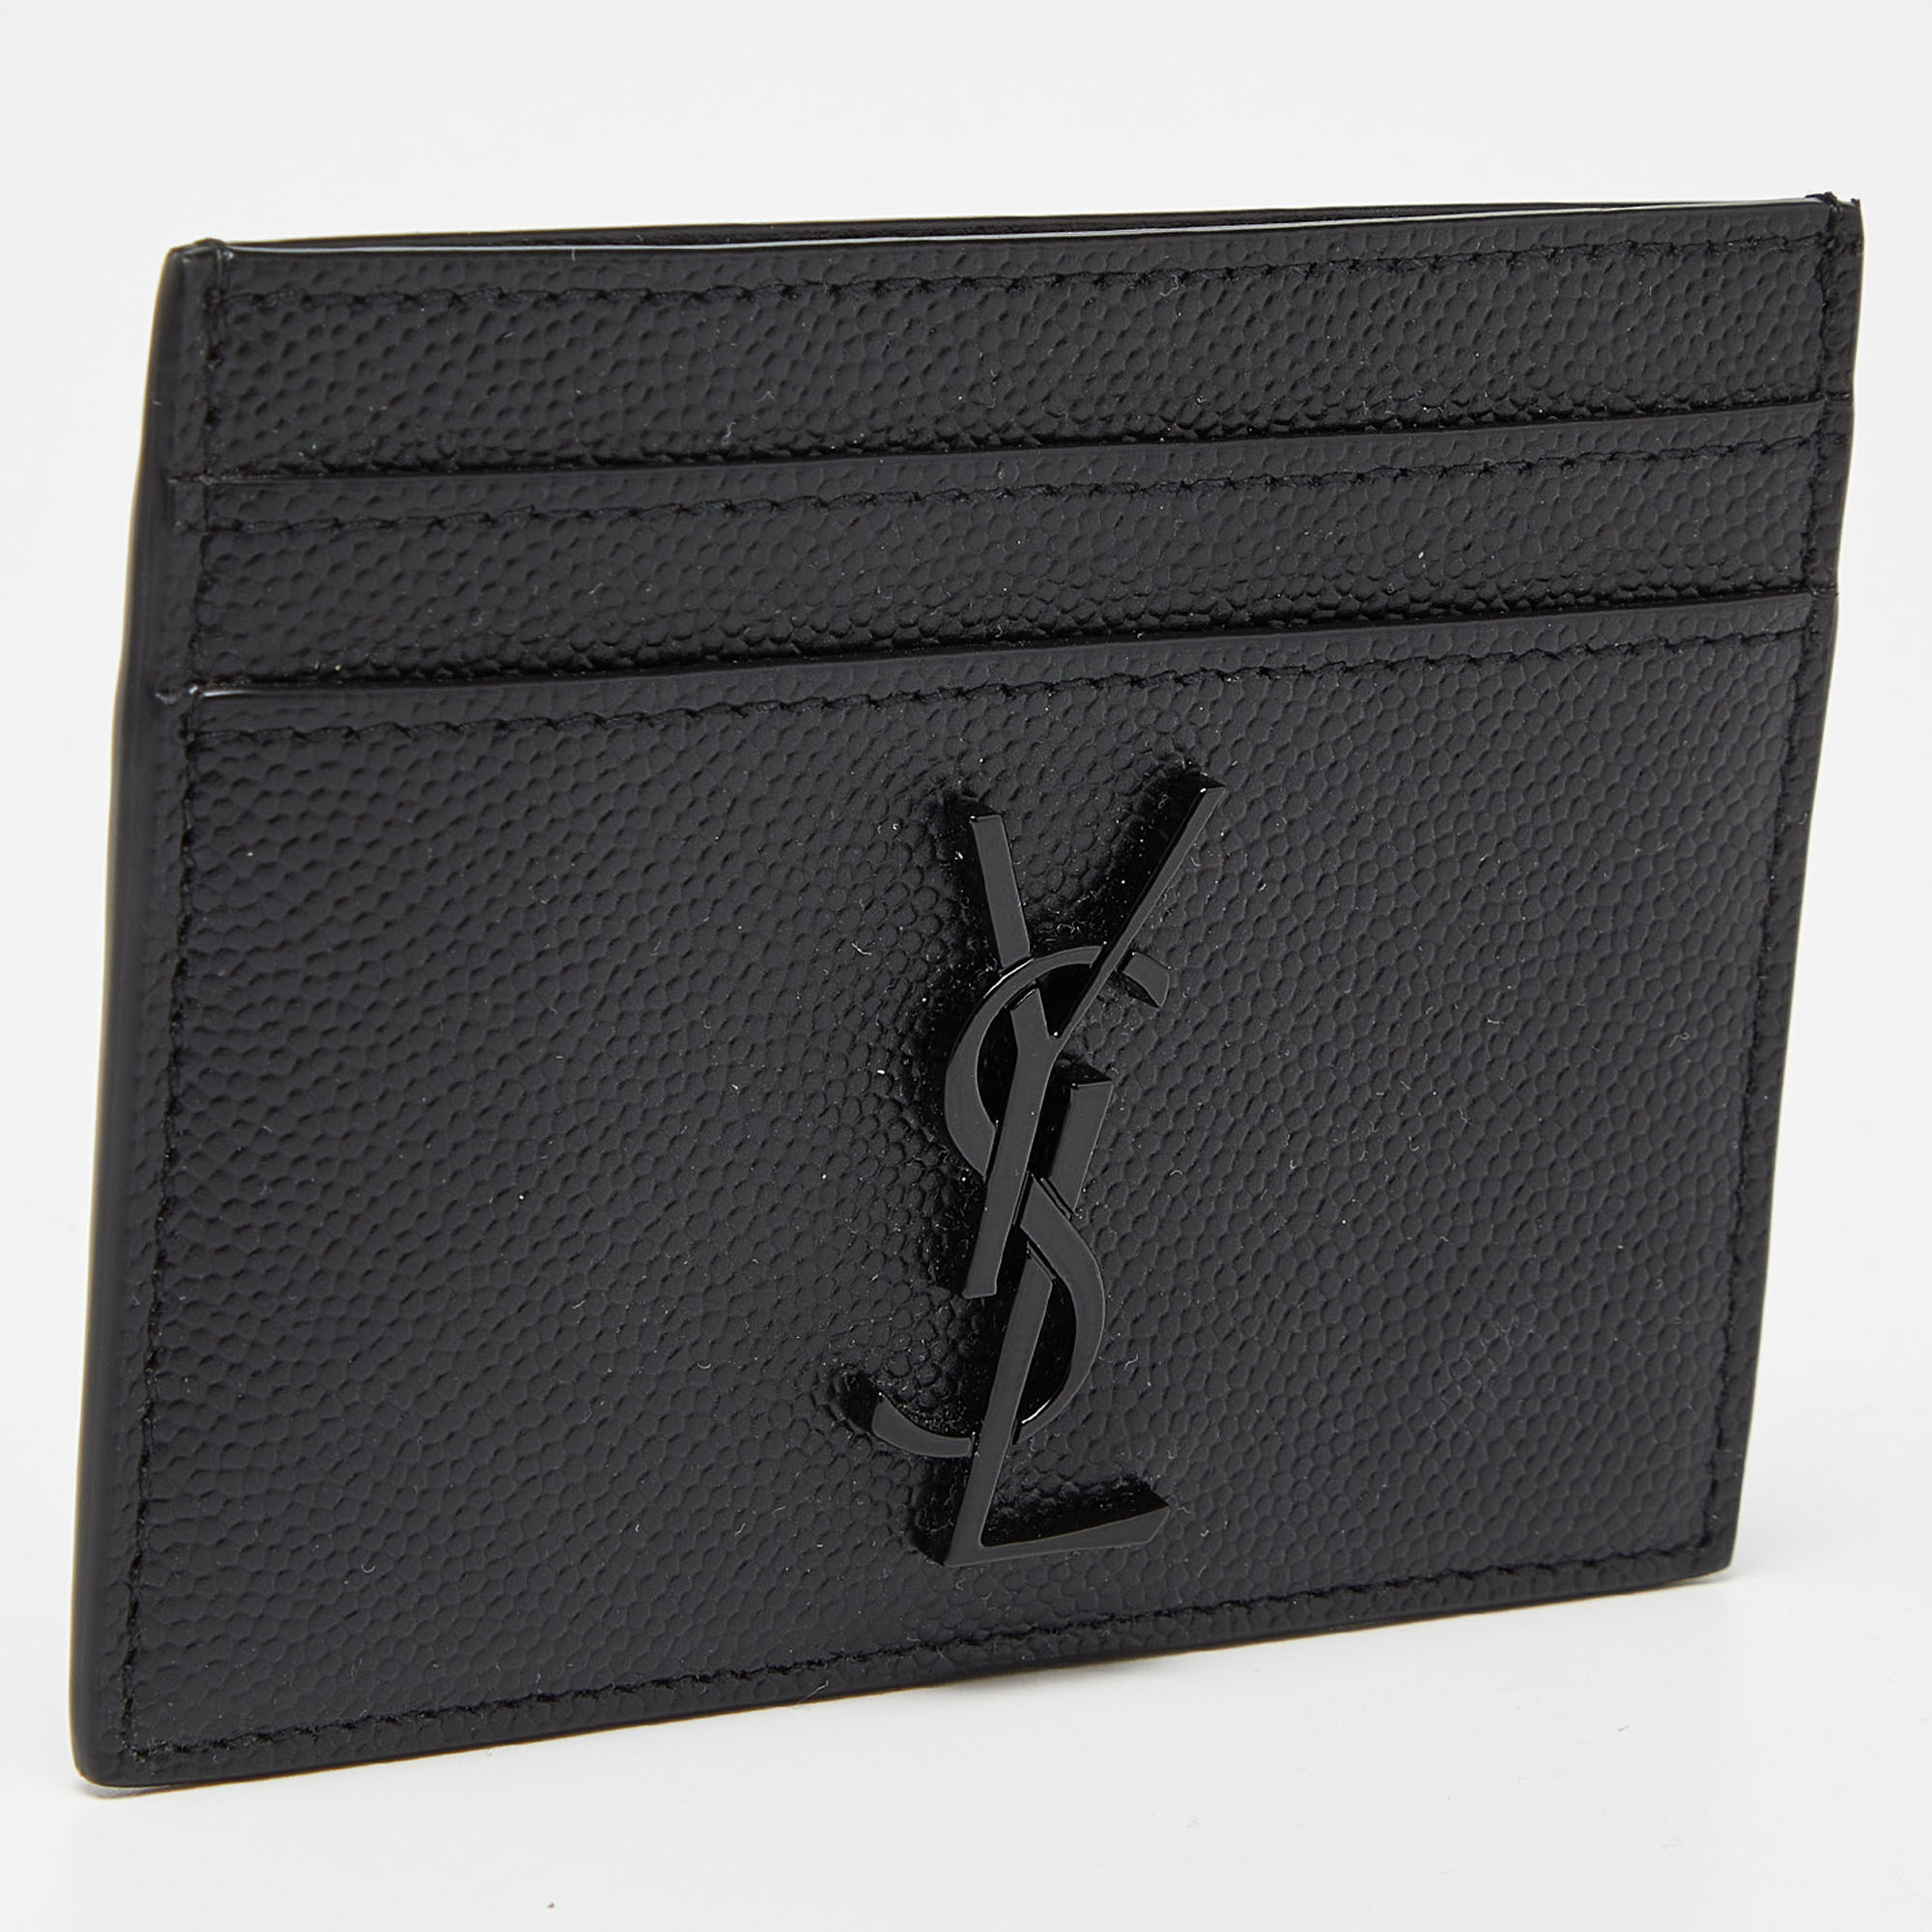 Saint Laurent Black Leather Monogram Card Holder